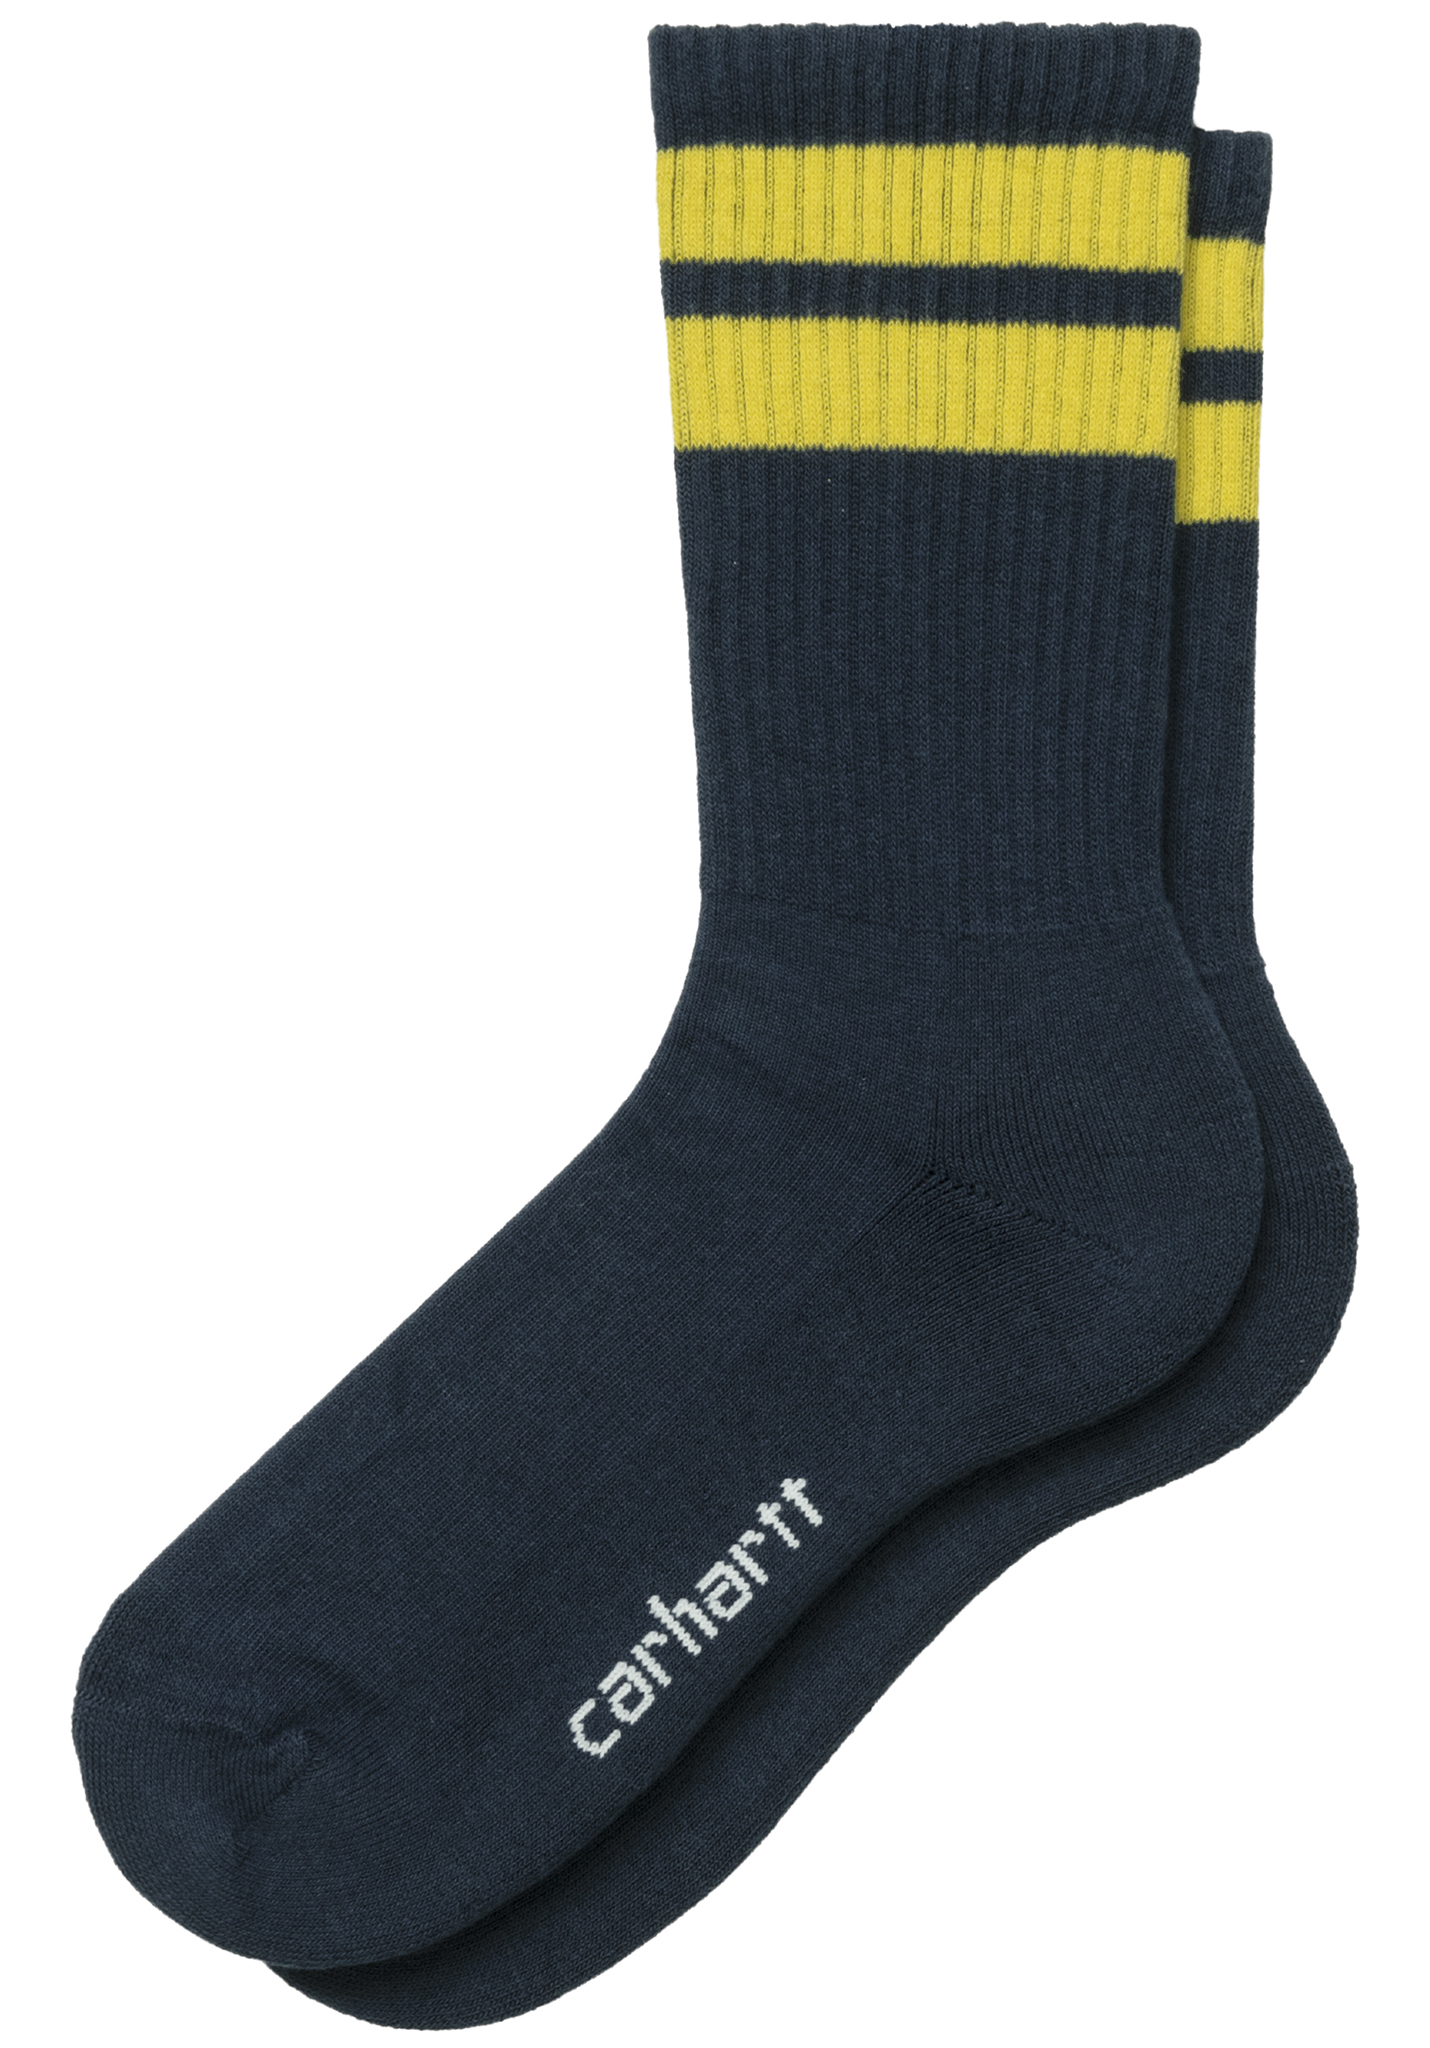 Carhartt WIP Jack Lange Socken raum / limoncello One Size